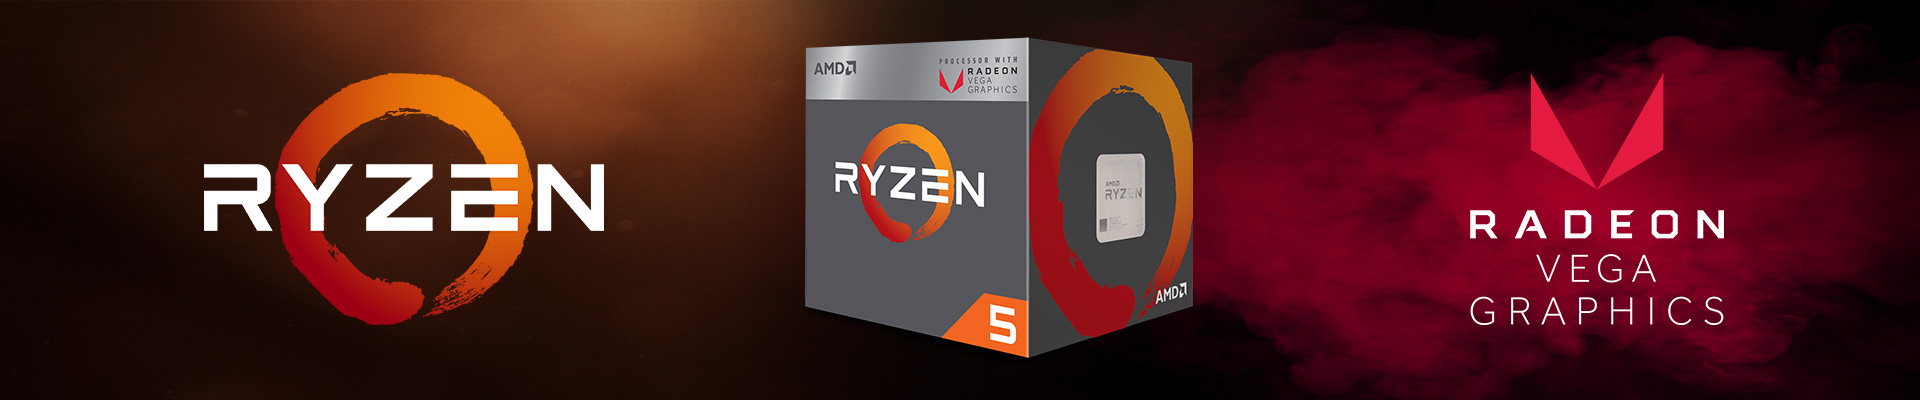 CPU AMD Ryzen 5 2400G 3.6 GHz (3.9 GHz with boost) / 6MB / 4 cores 8 threads / Radeon Vega 11 / socket AM4 giá tốt